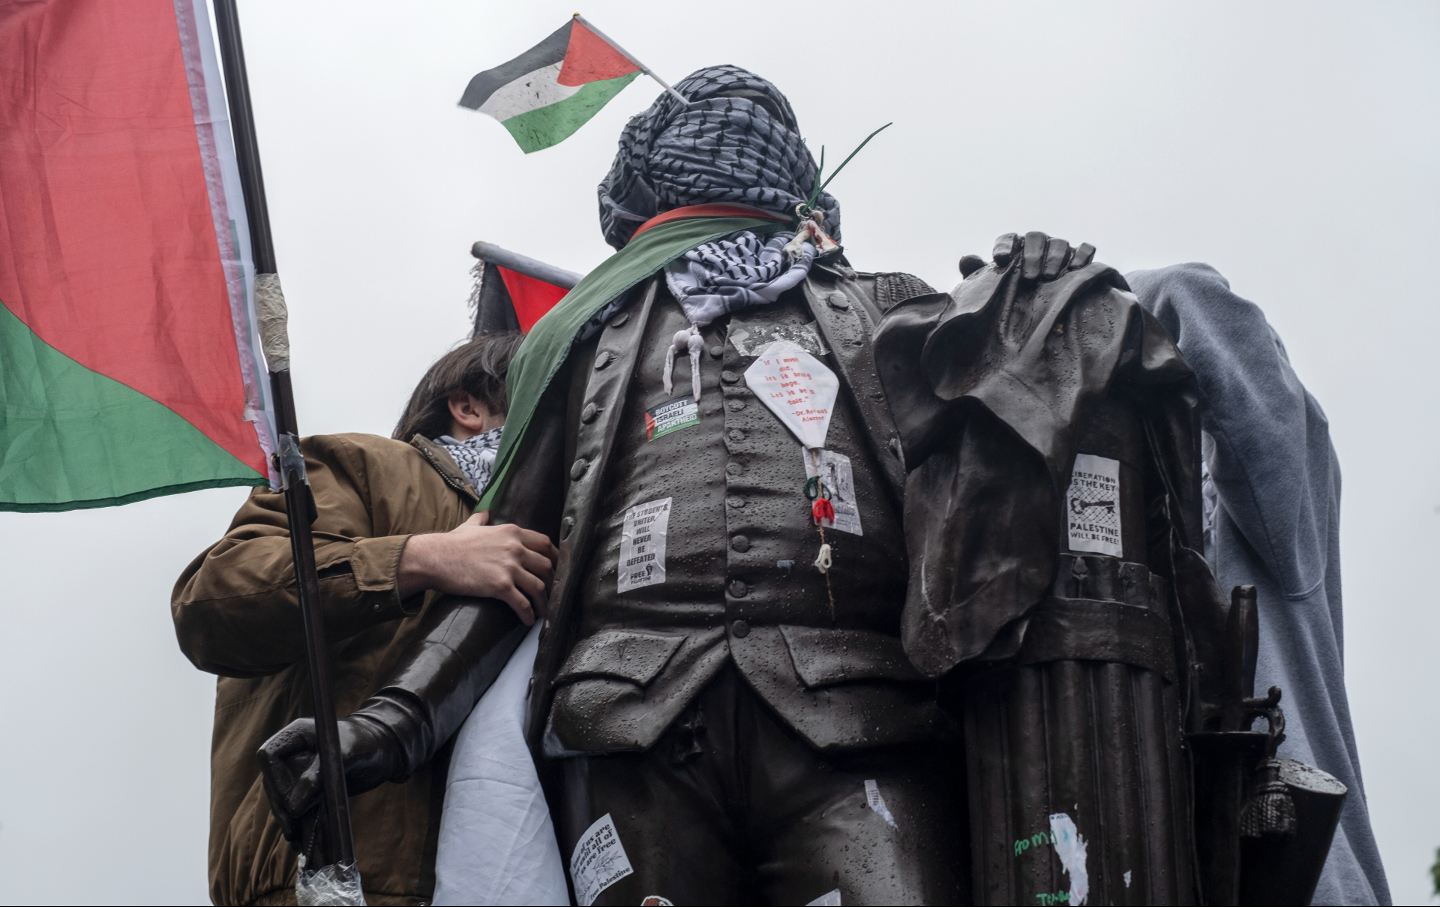 Students wrap Palestinian flag and Keffiye around the statue of George Washington at the George Washington University encampment protest.